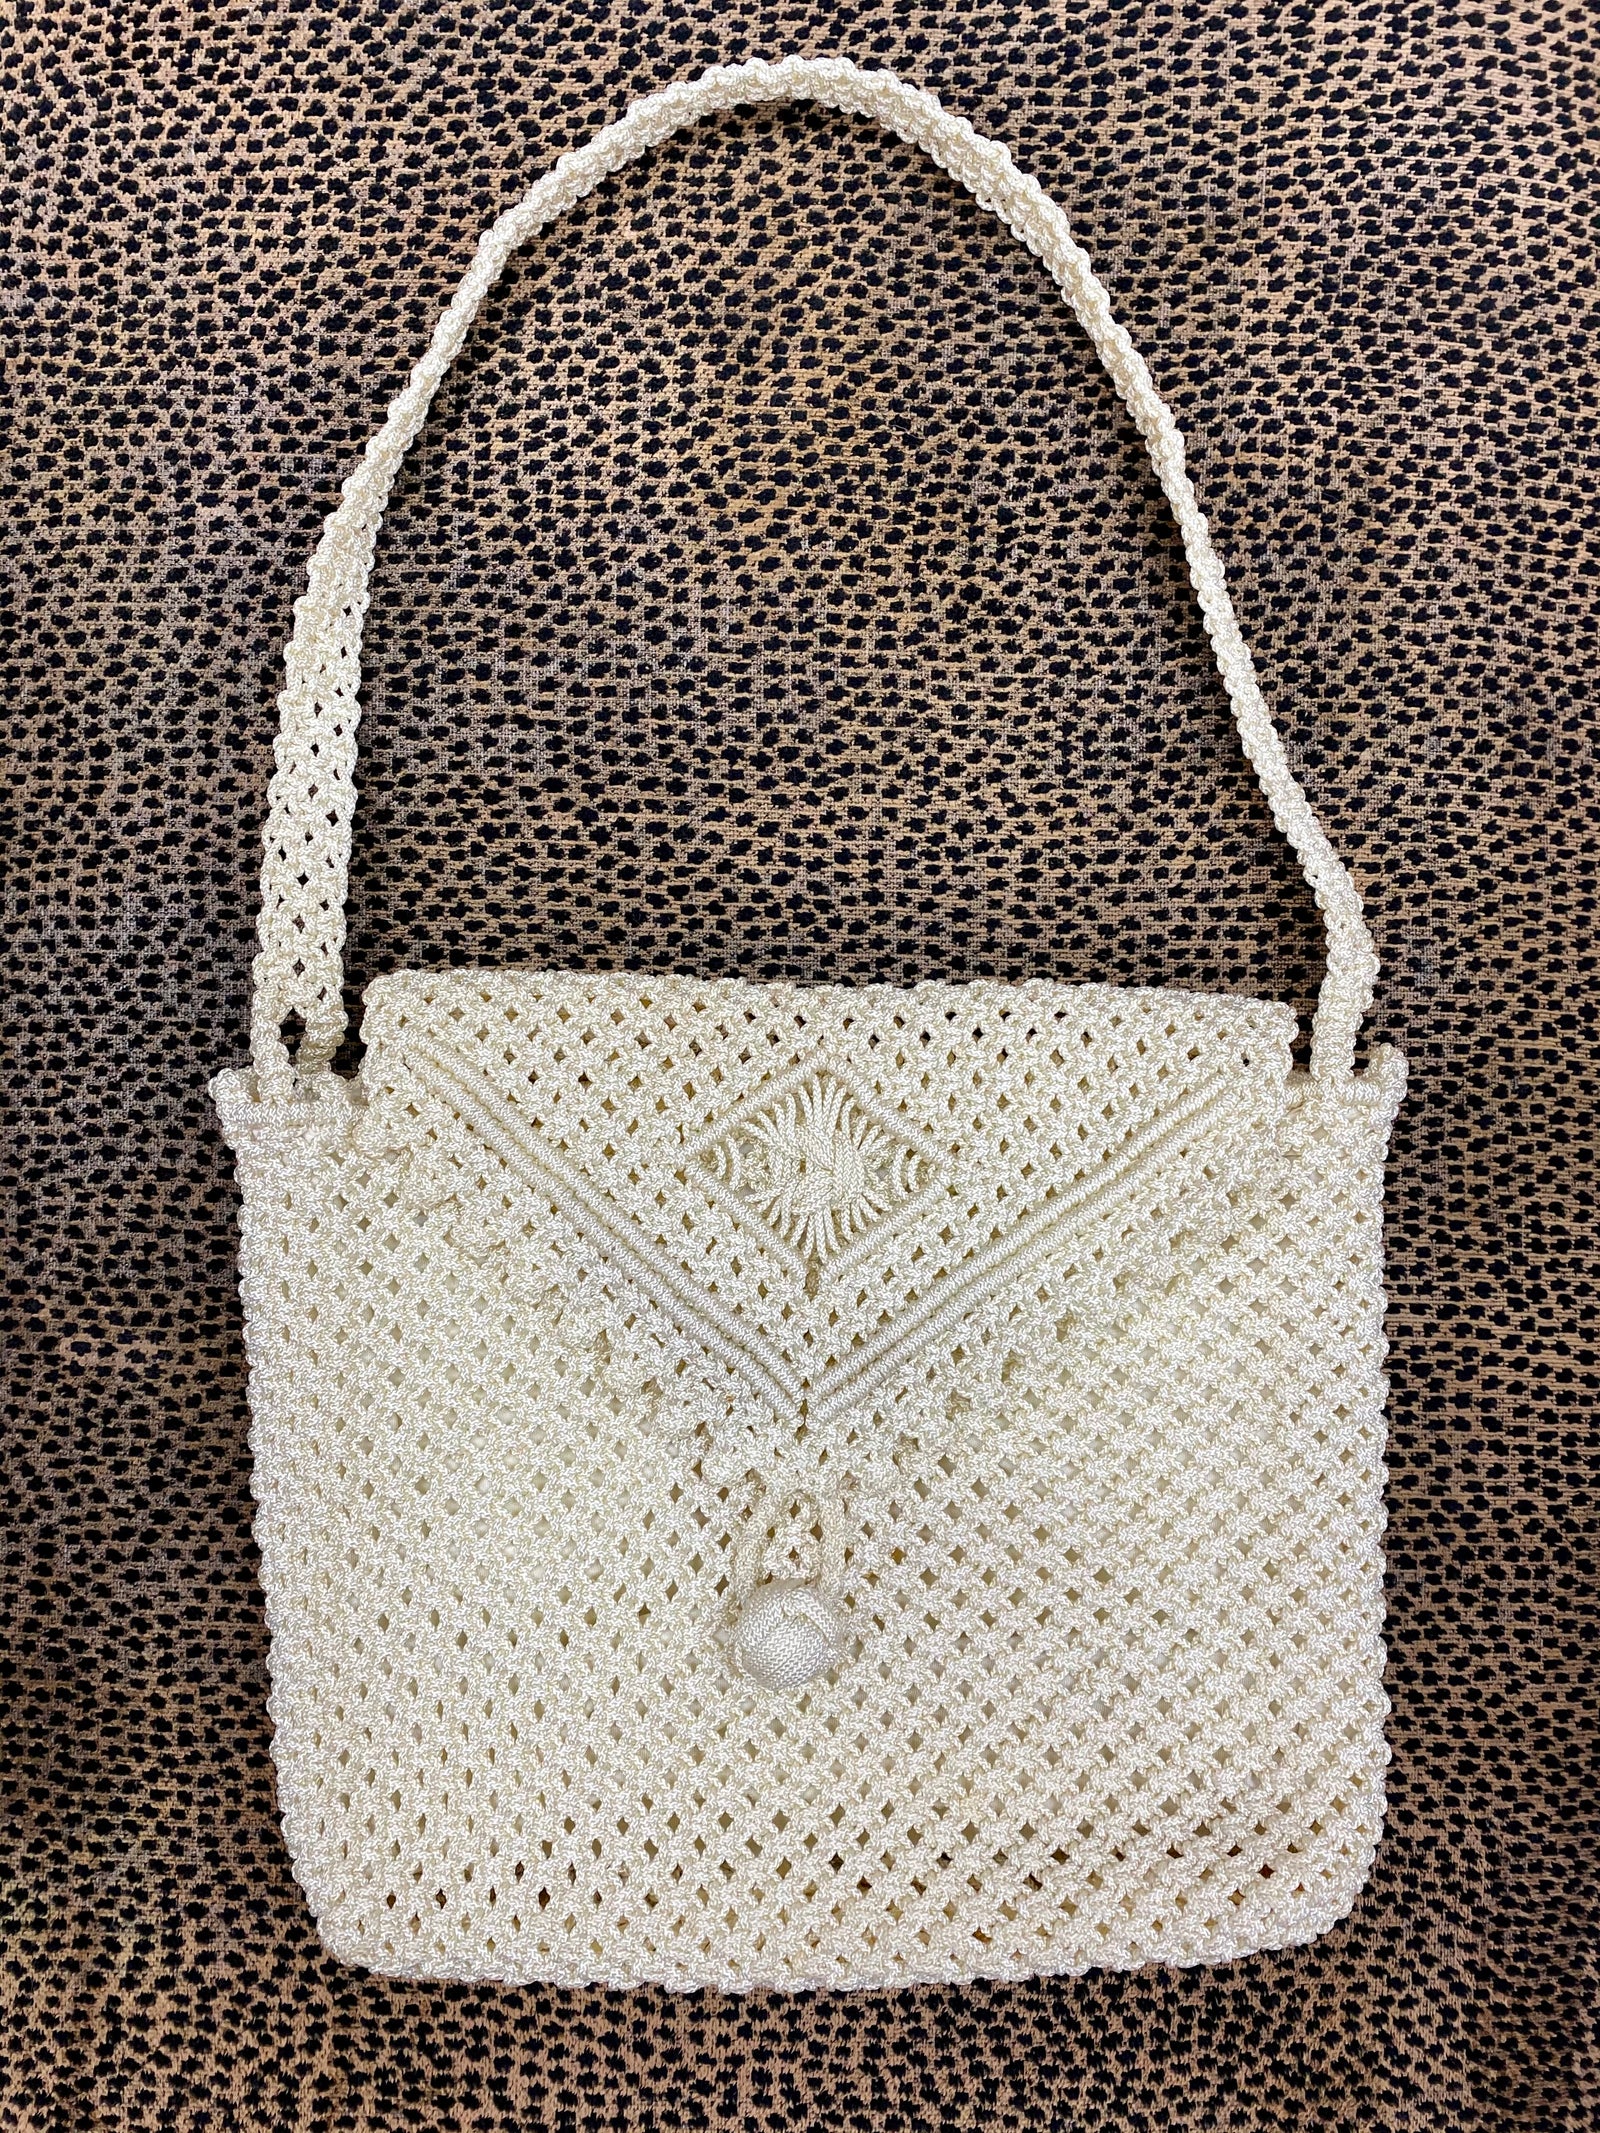 Vintage Structured Thick Crochet Handbag